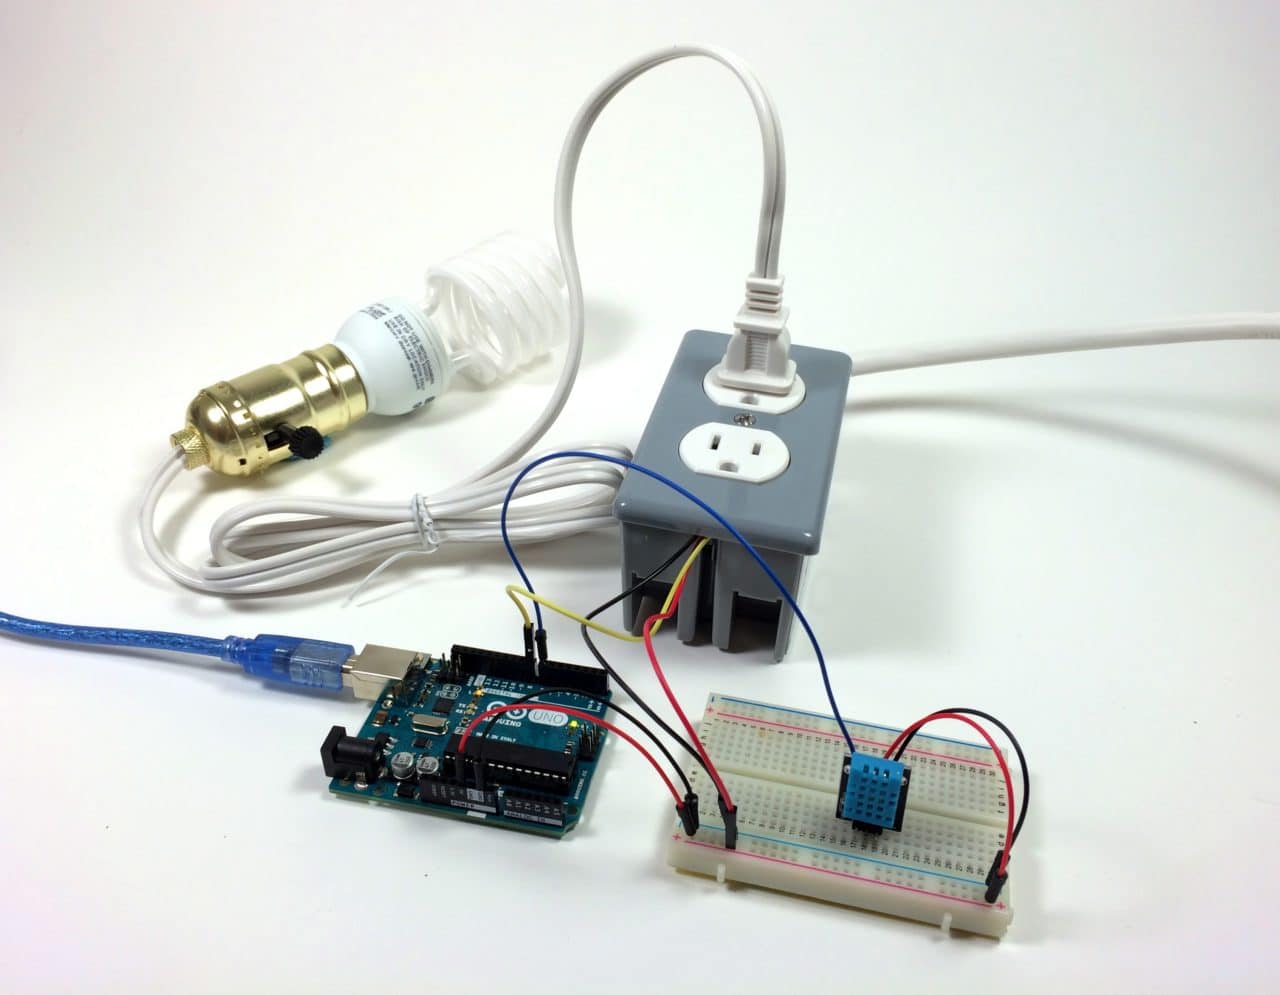 https://www.circuitbasics.com/wp-content/uploads/2015/12/Build-an-Arduino-Controlled-Power-Outlet-24.jpg